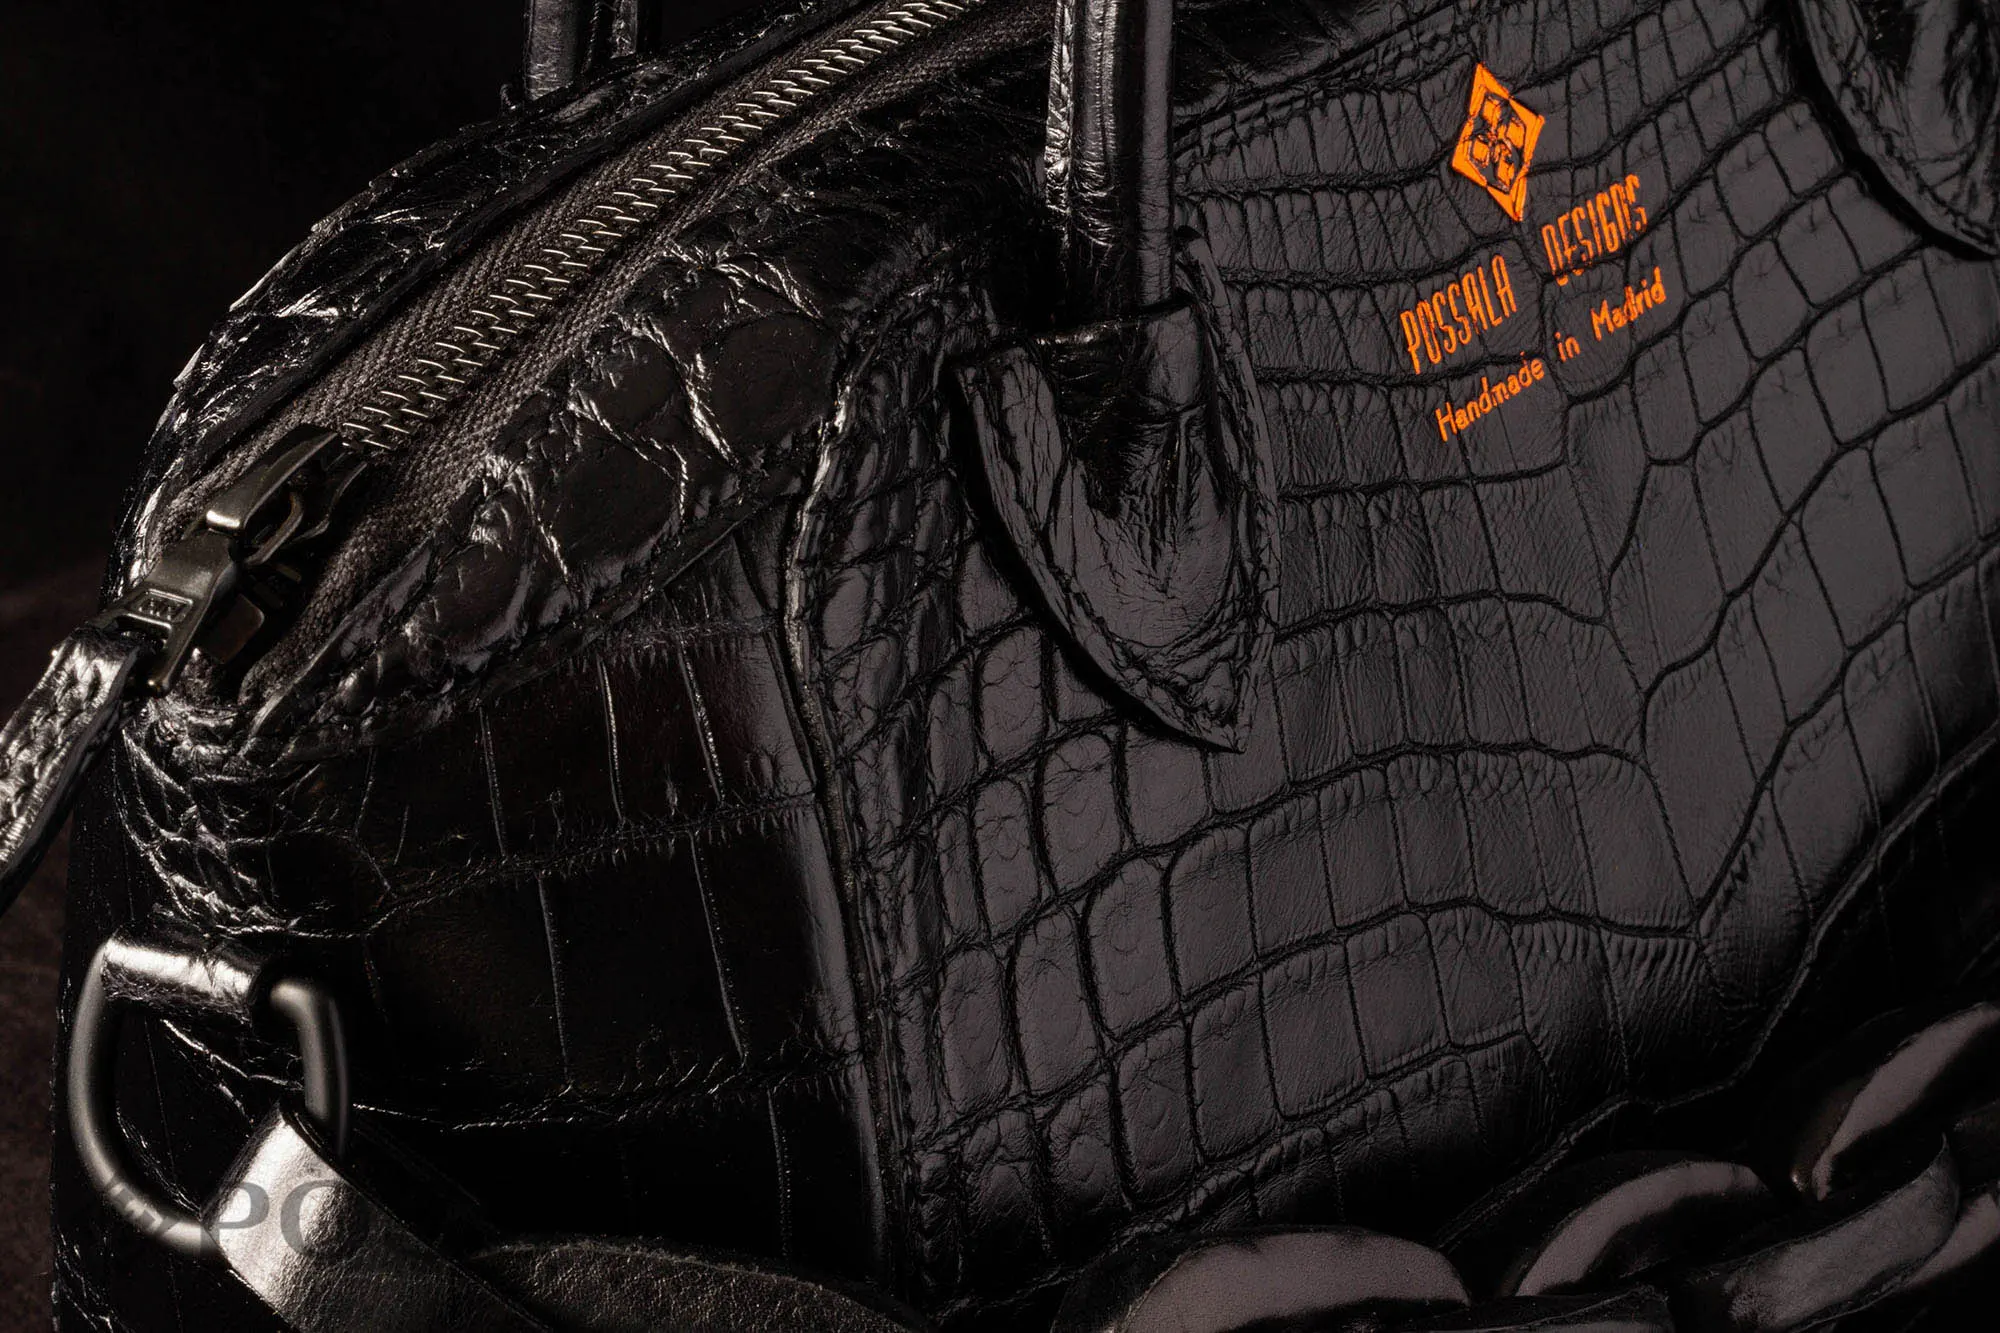 Black Crocodile Luxury Purse - Possala Designs